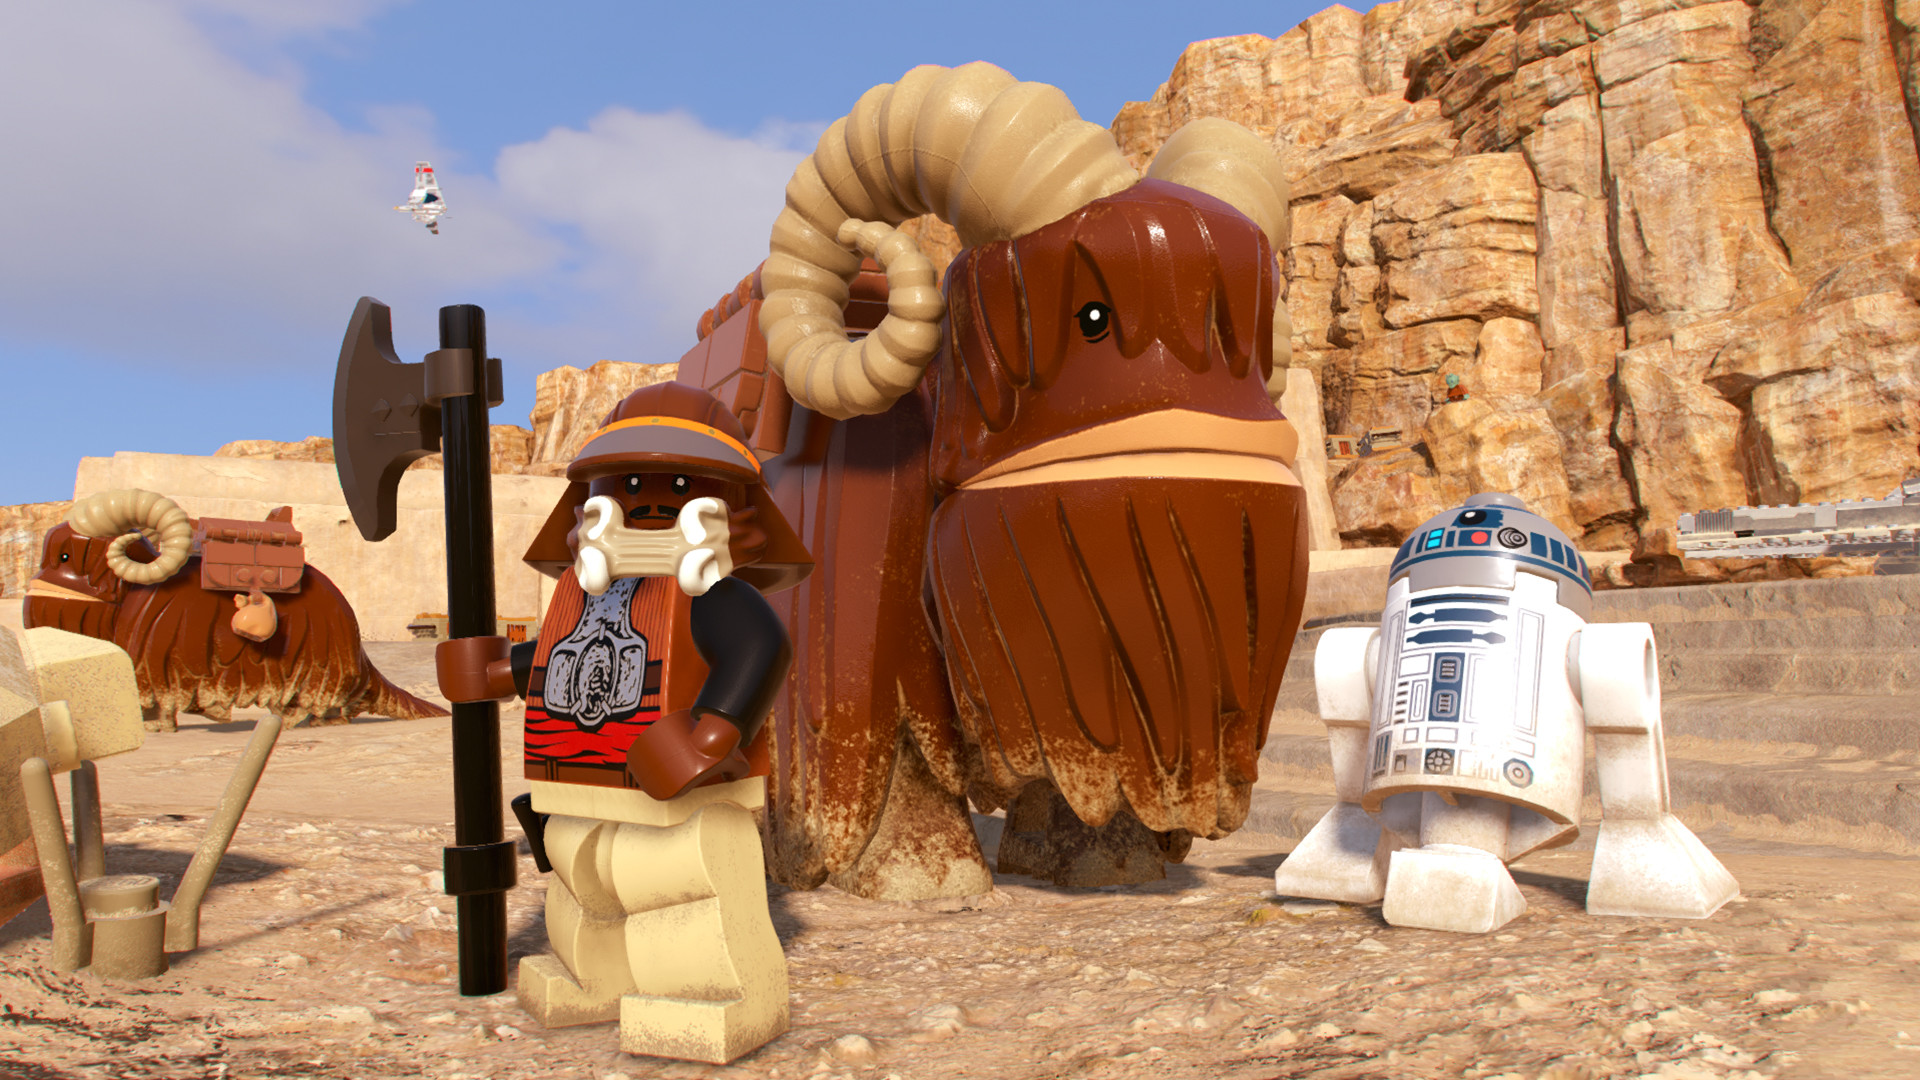 Online Co op and Multiplayer!?!? LEGO Star Wars Skywalker Saga Needs Online  Multiplayer!! 